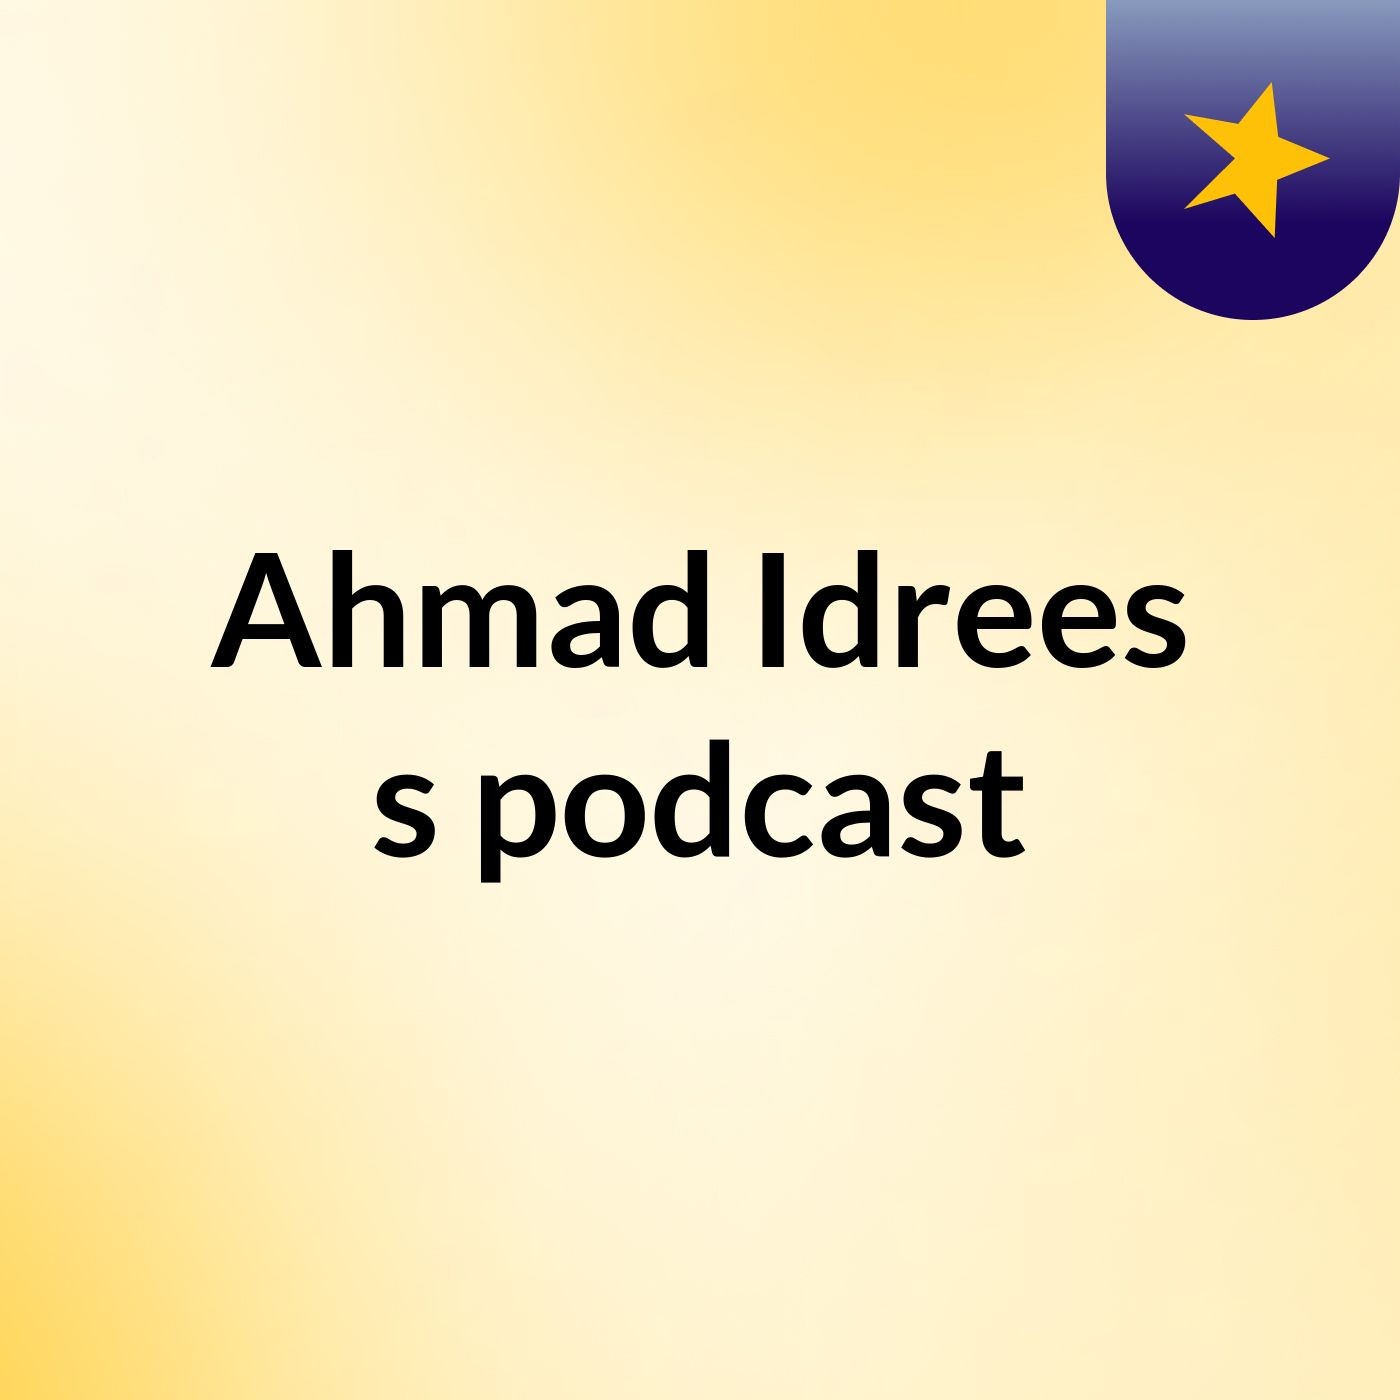 Ahmad Idrees's podcast